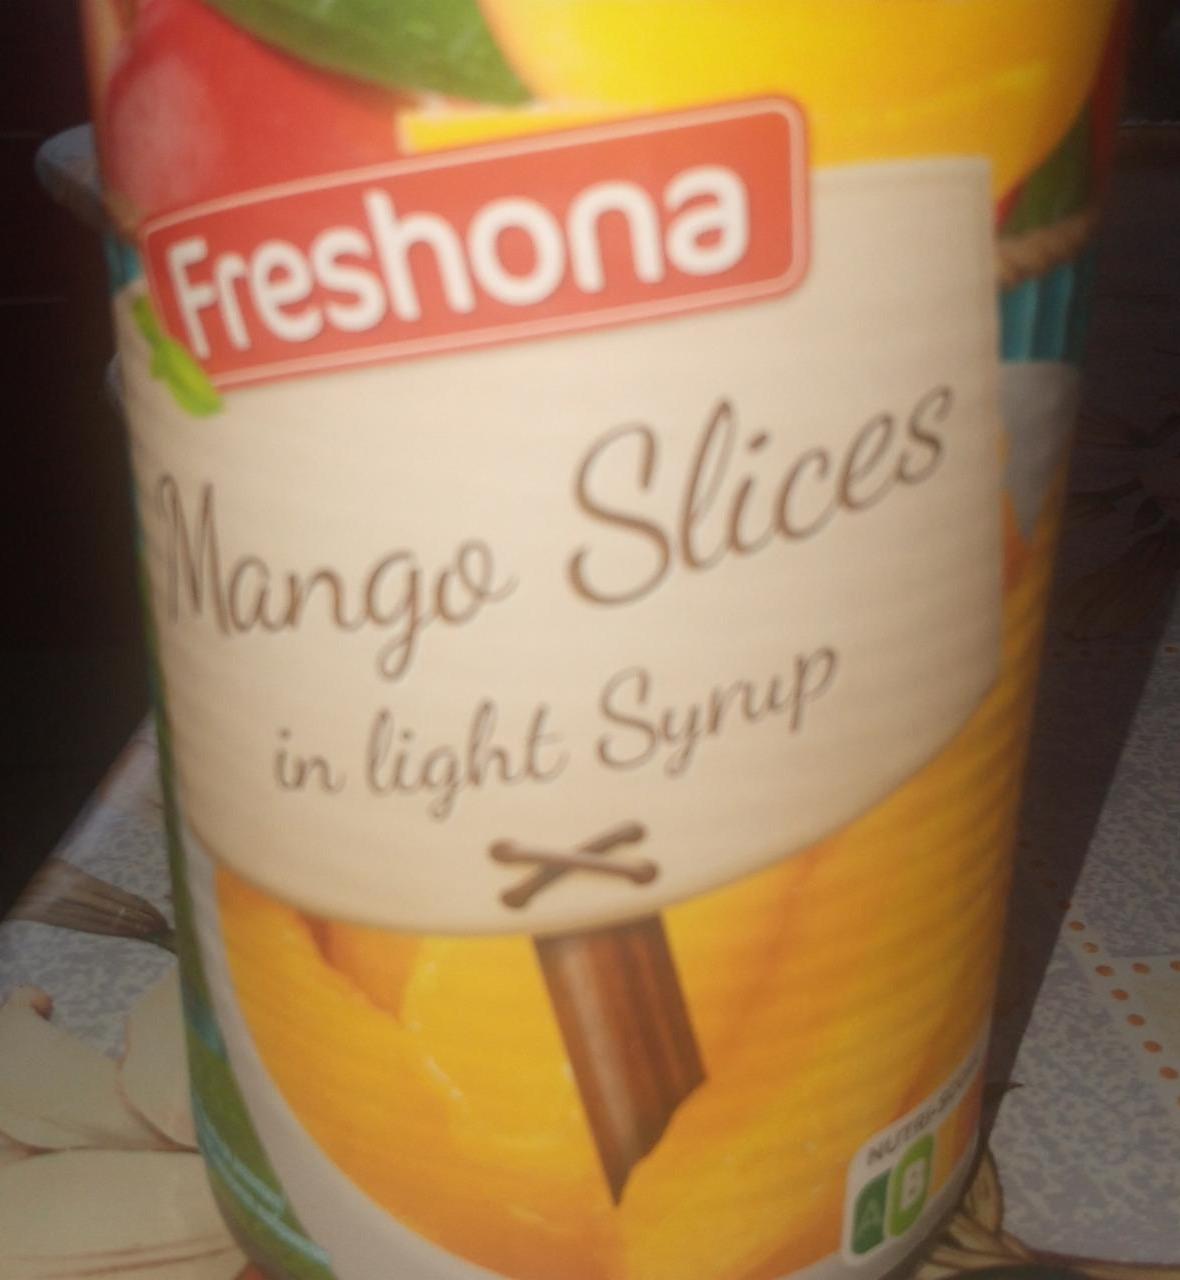 Képek - Mango slices in light syrup Freshona